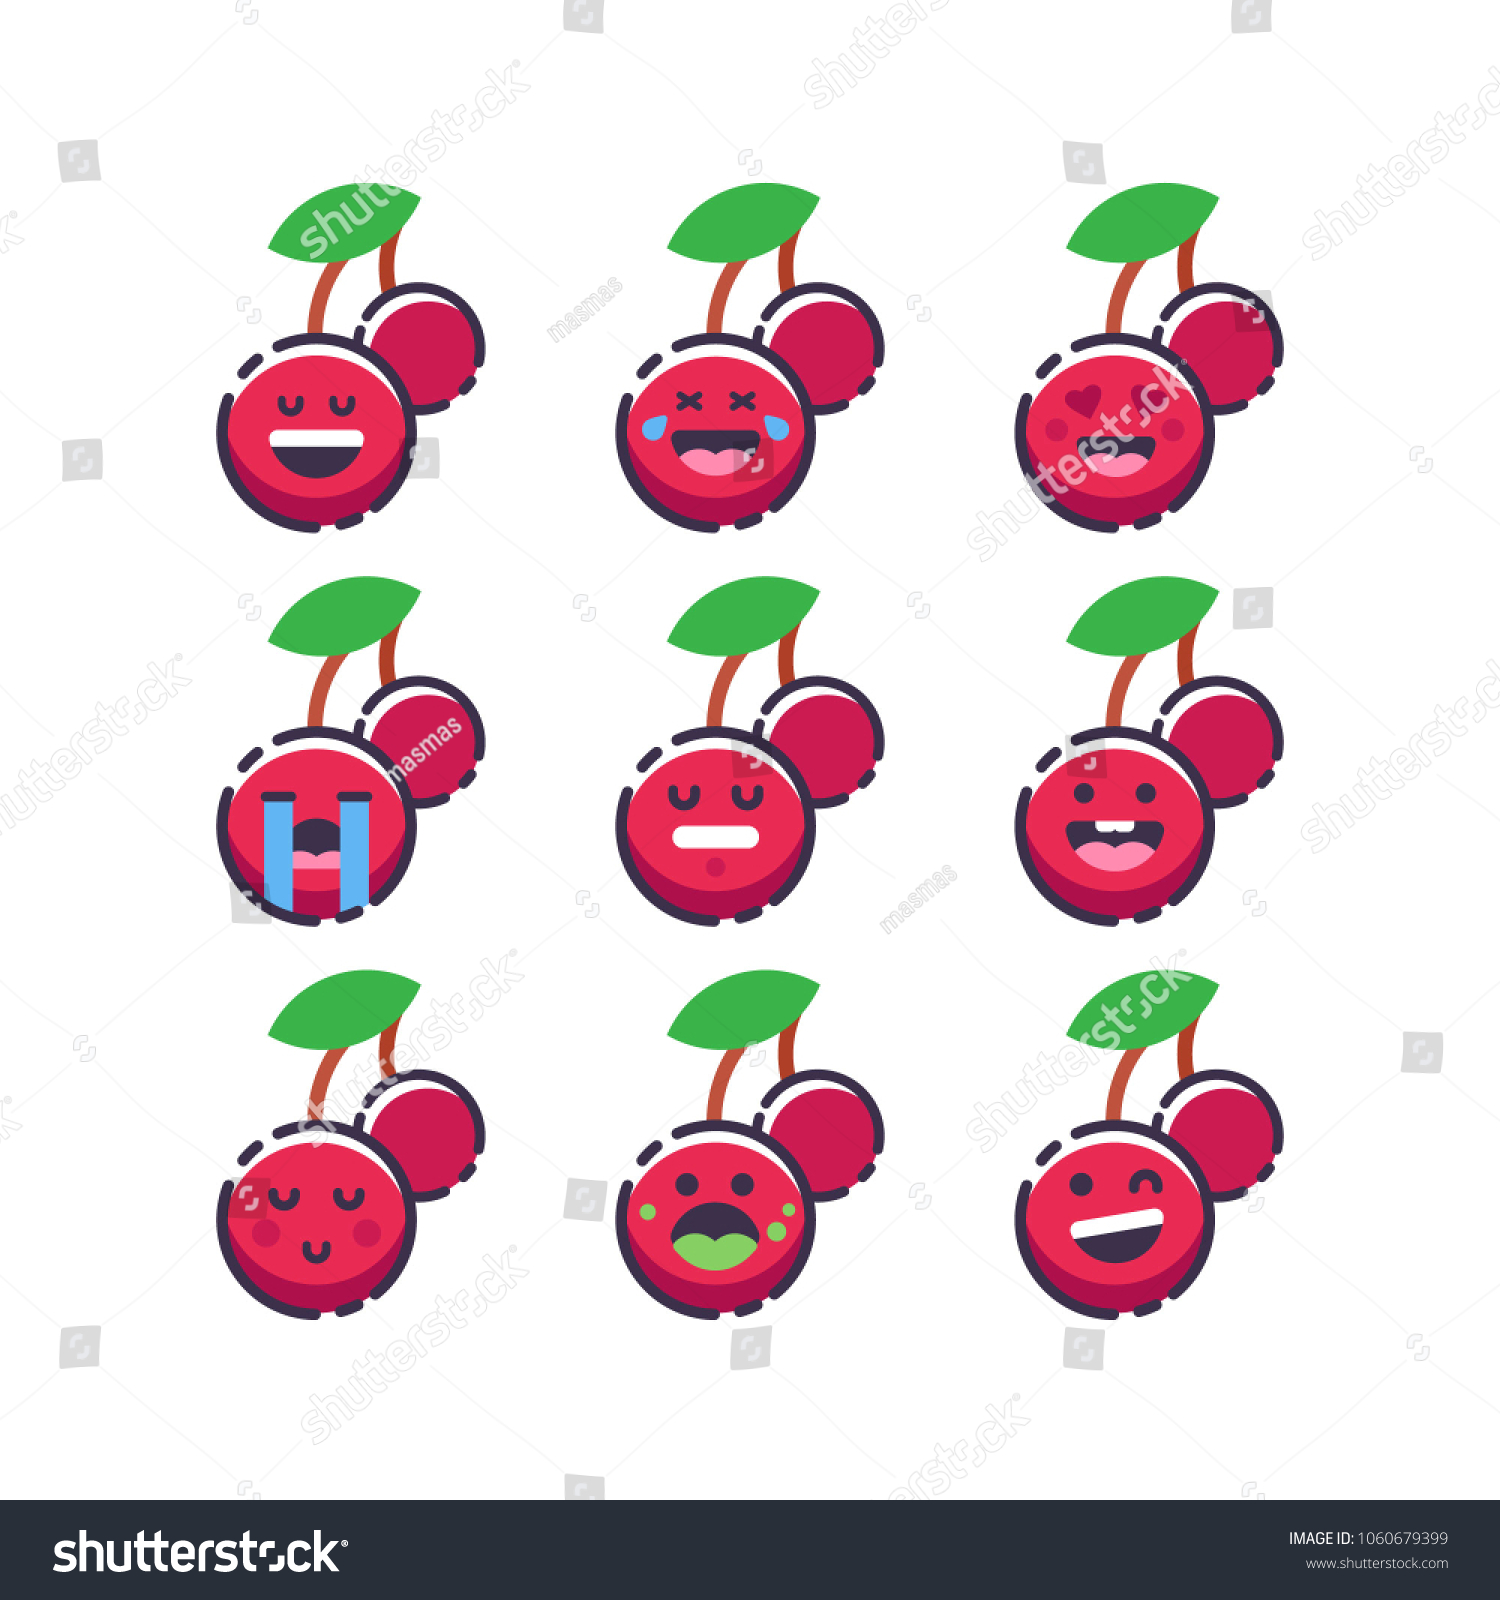 Cute Smiling Red Cherries Set Emoji Stock Vector Royalty Free 1060679399 Shutterstock